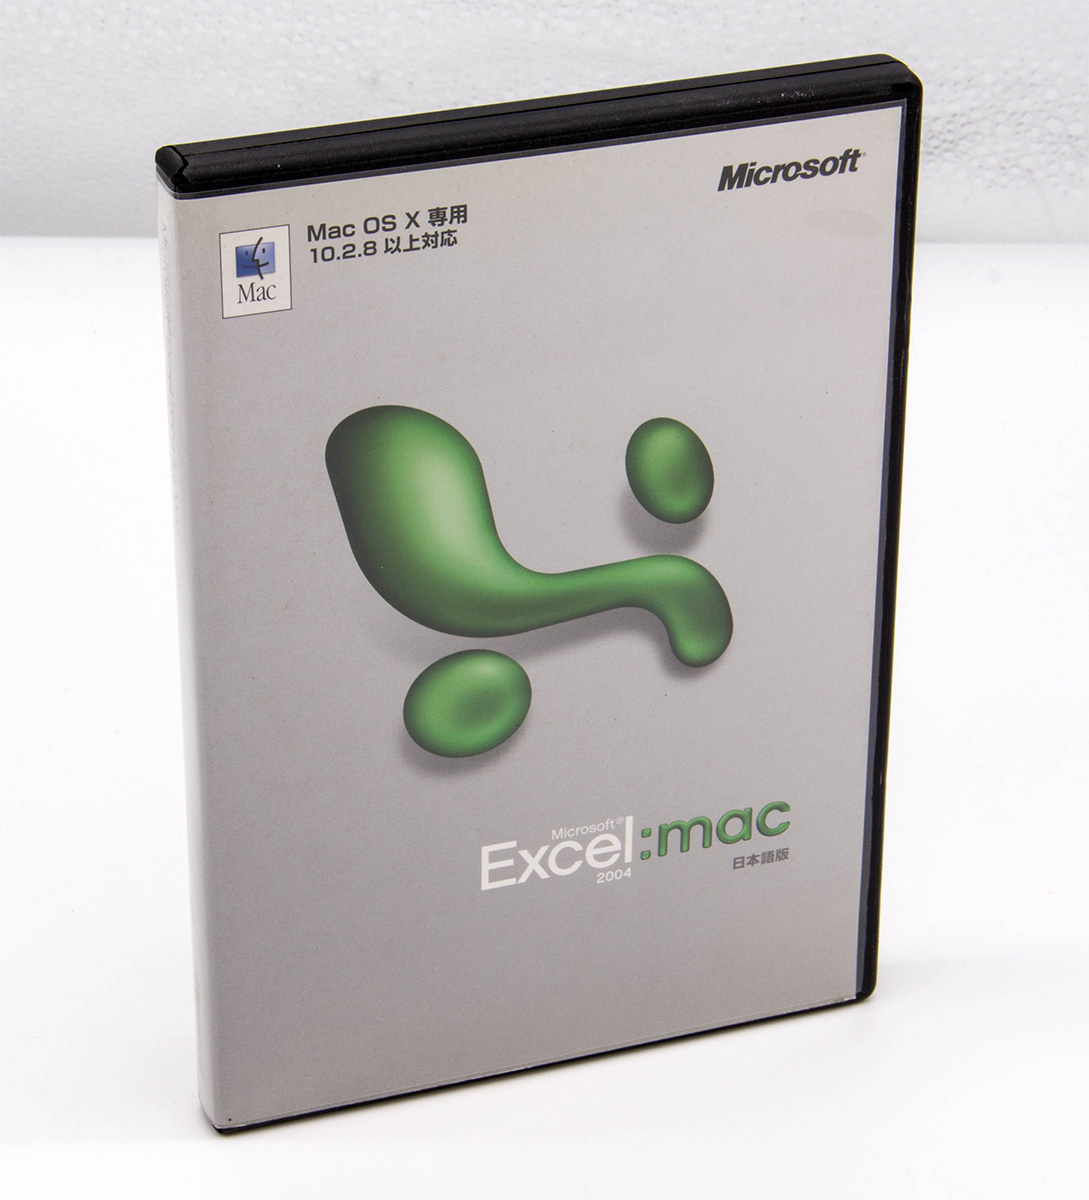 Microsoft Excel:mac 2004 Excel 2004 for Mac エクセル 日本語版 中古 プロダクトキー付 製品版_画像1